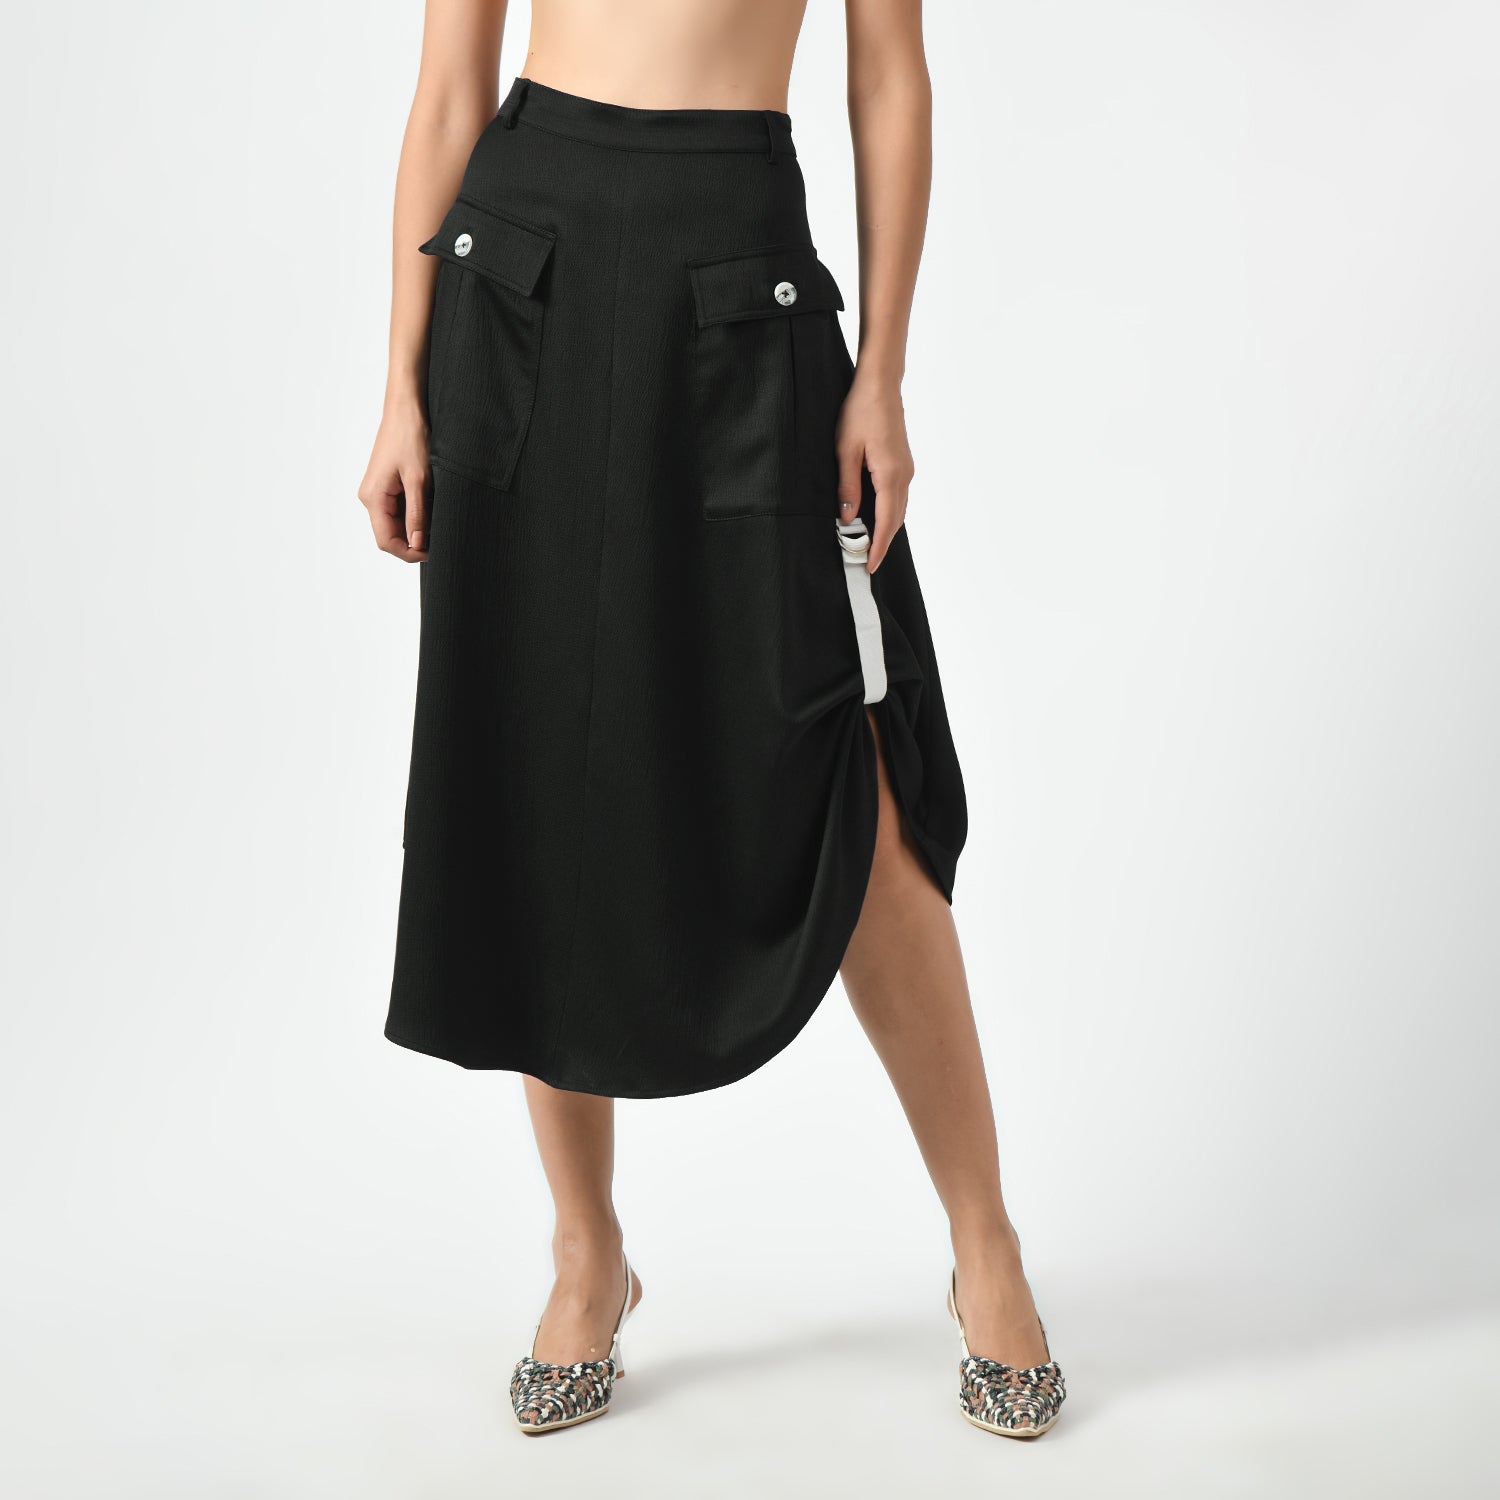 Black Skirt With Pocket